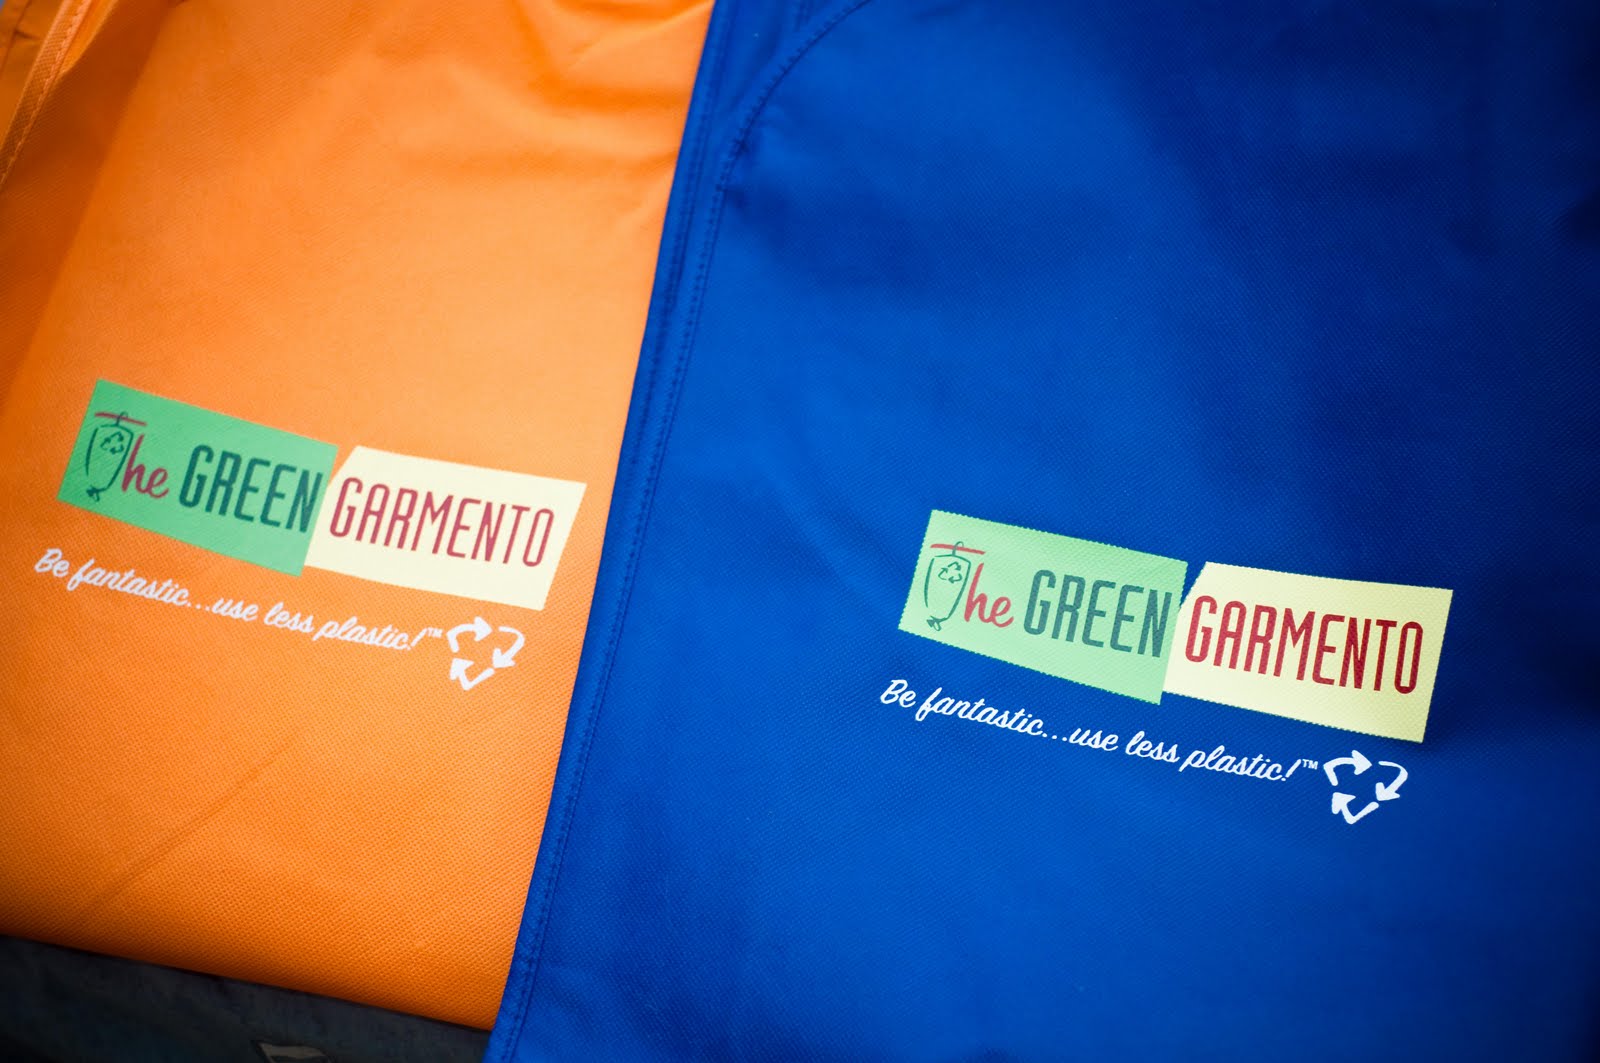 The Green Garmento garment bag